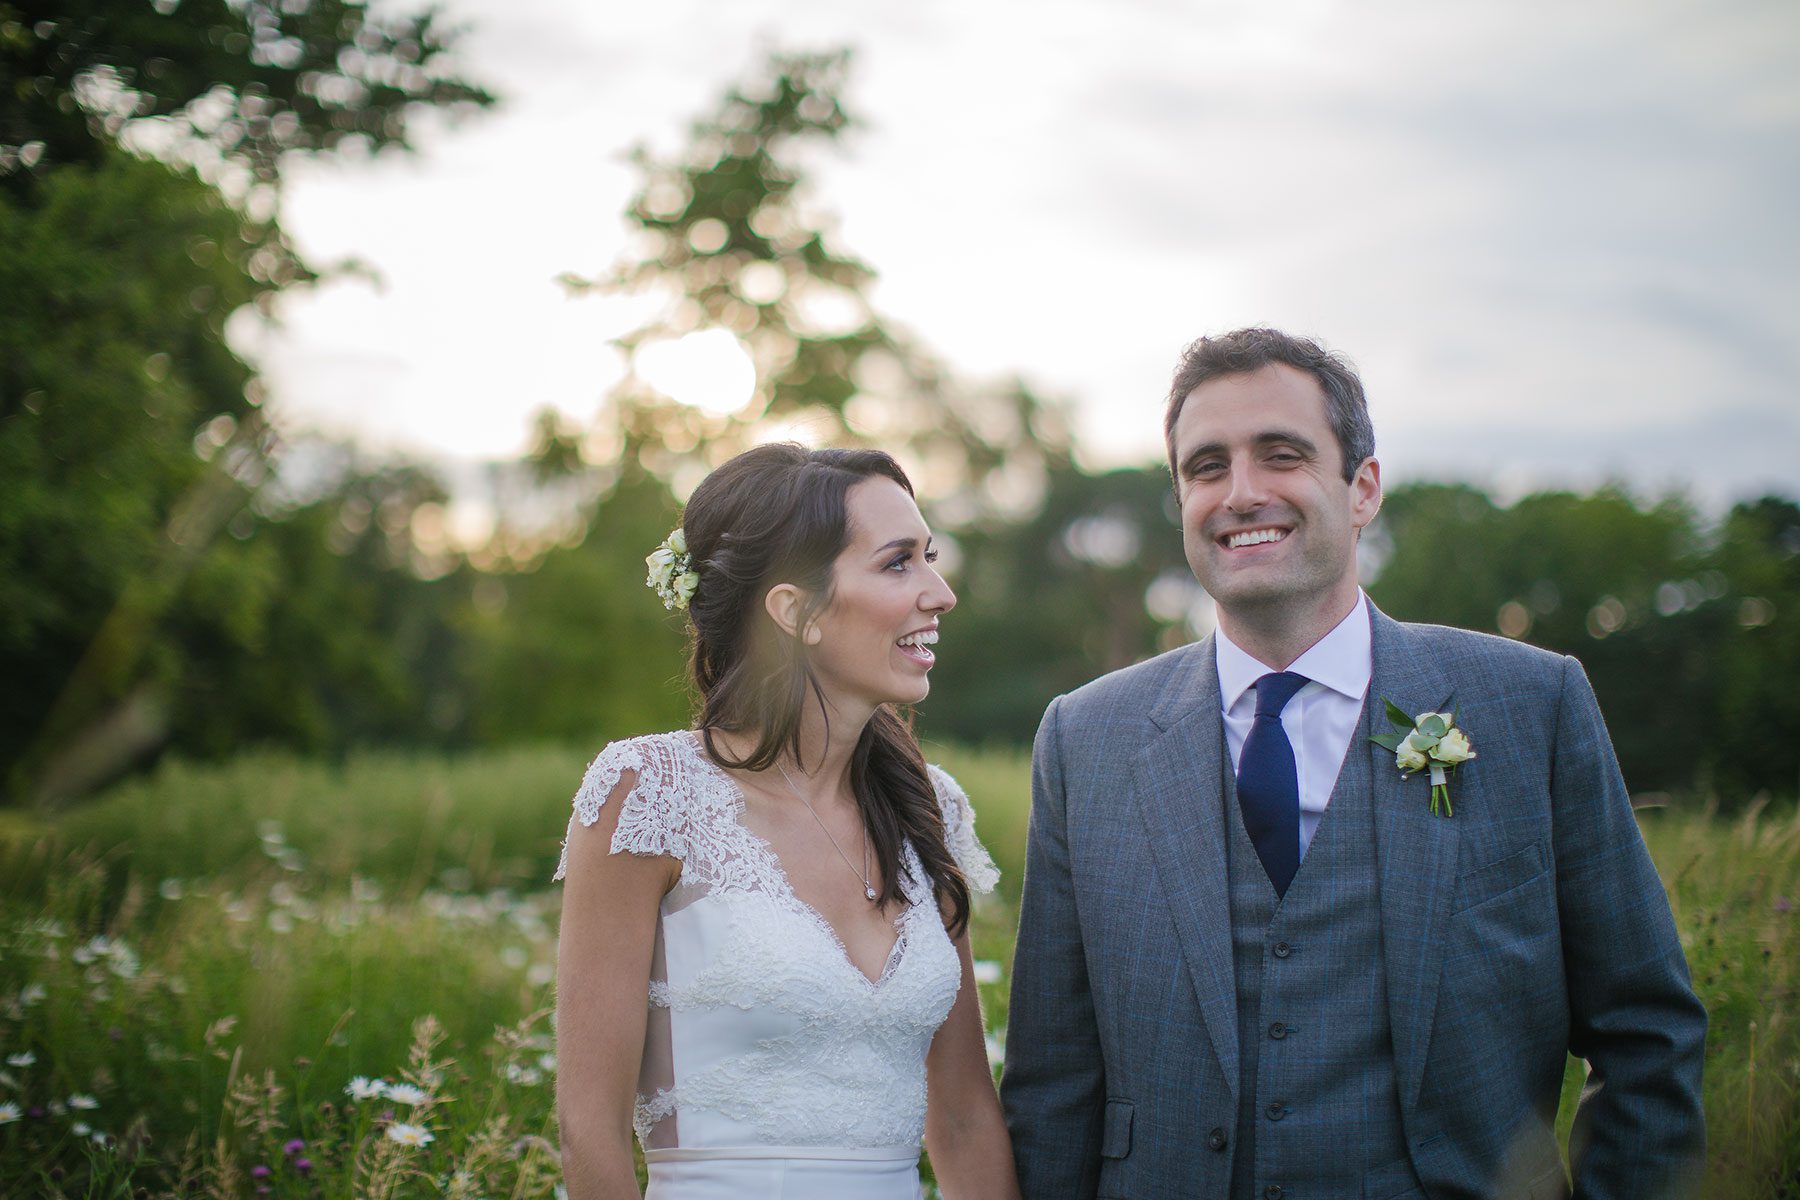 Reportage Wedding Photography in Cheltenham | Bullit Photography